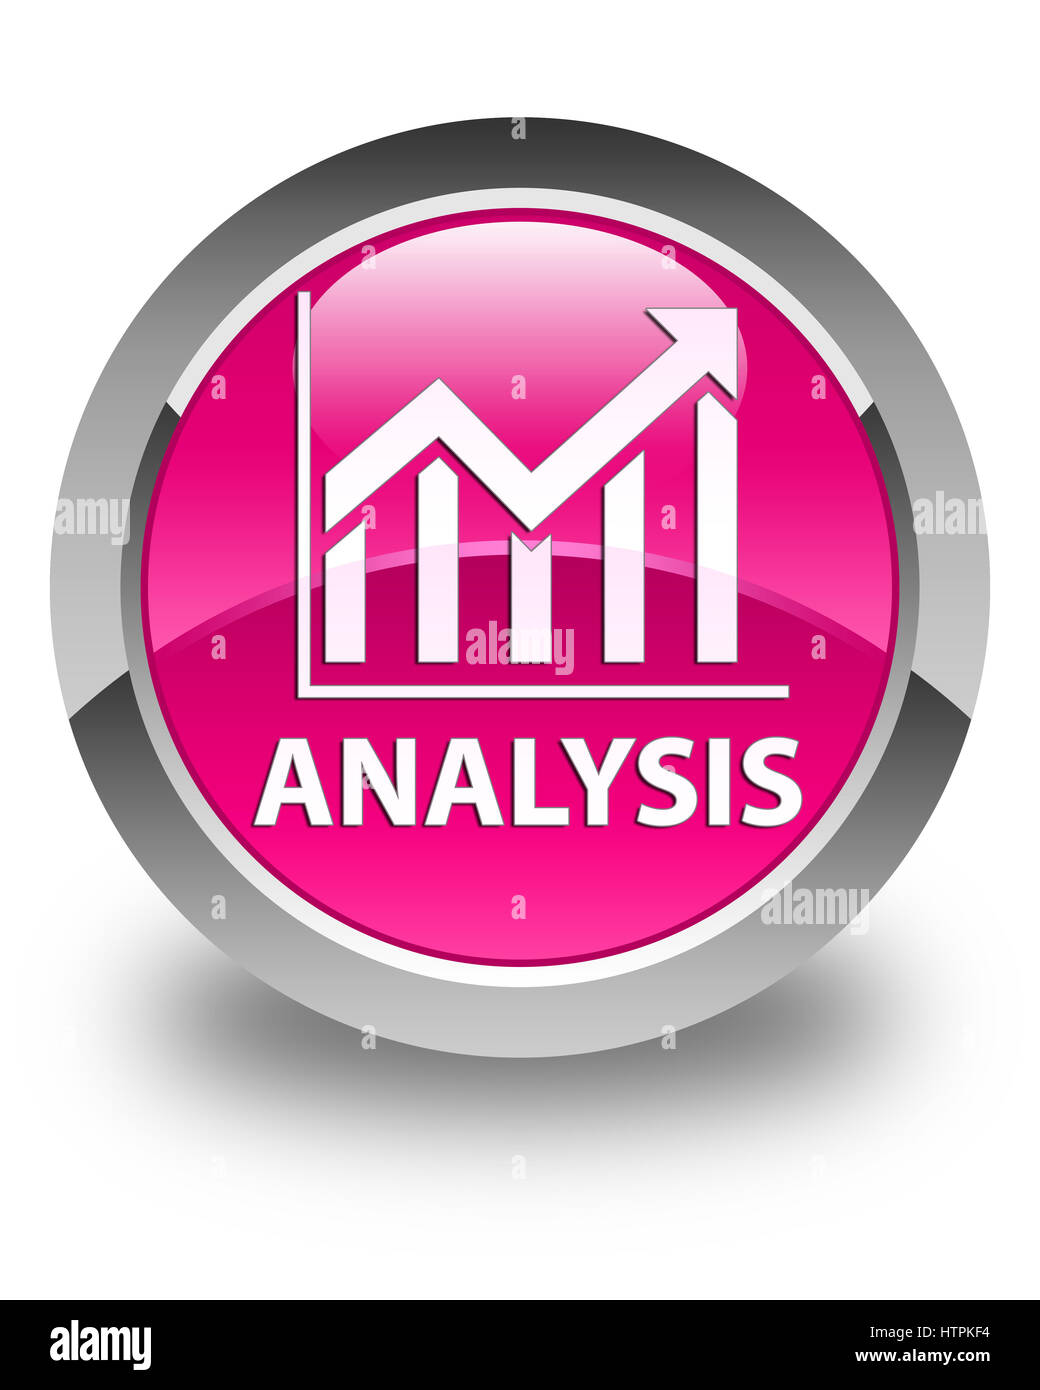 (Analyse statistique) isolé sur l'icône bouton rond rose brillant abstract illustration Banque D'Images